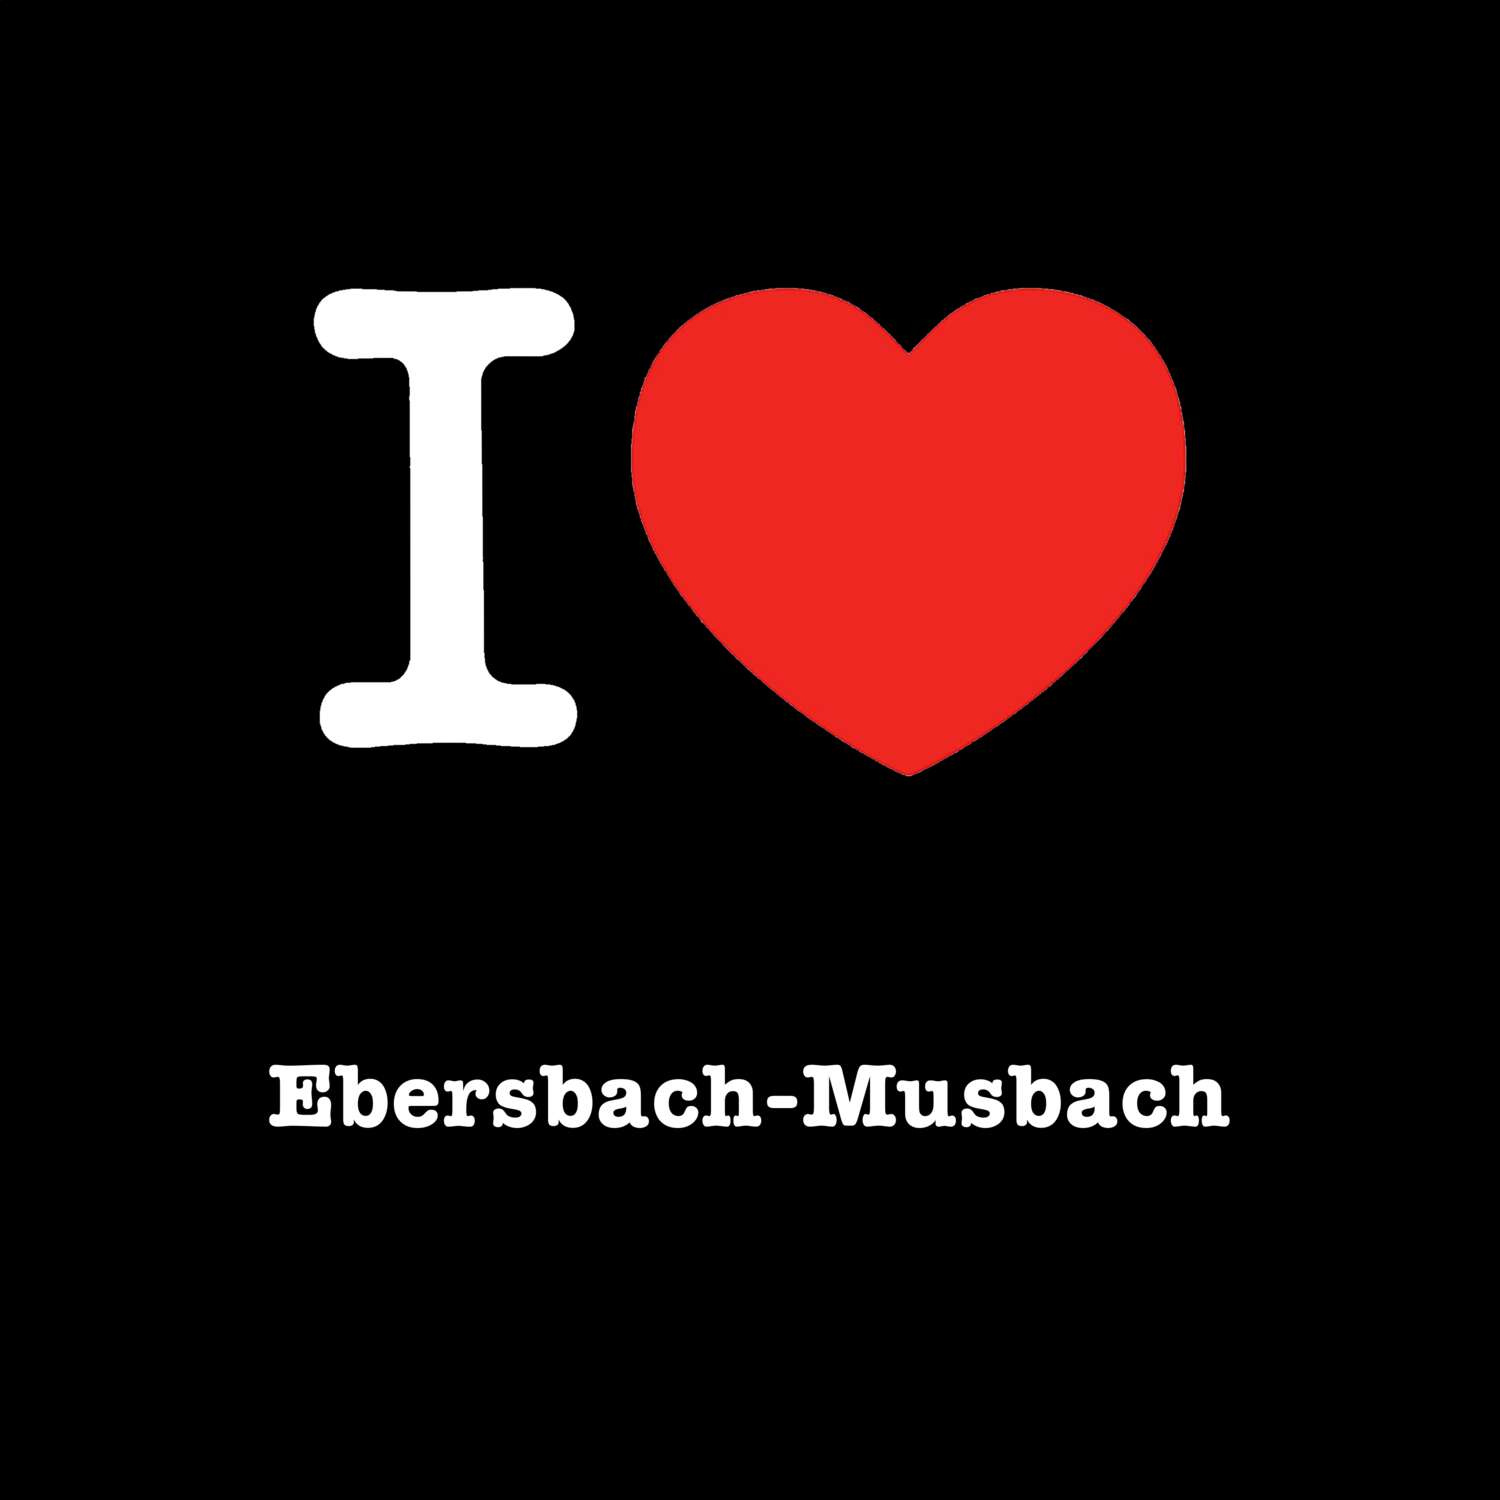 Ebersbach-Musbach T-Shirt »I love«